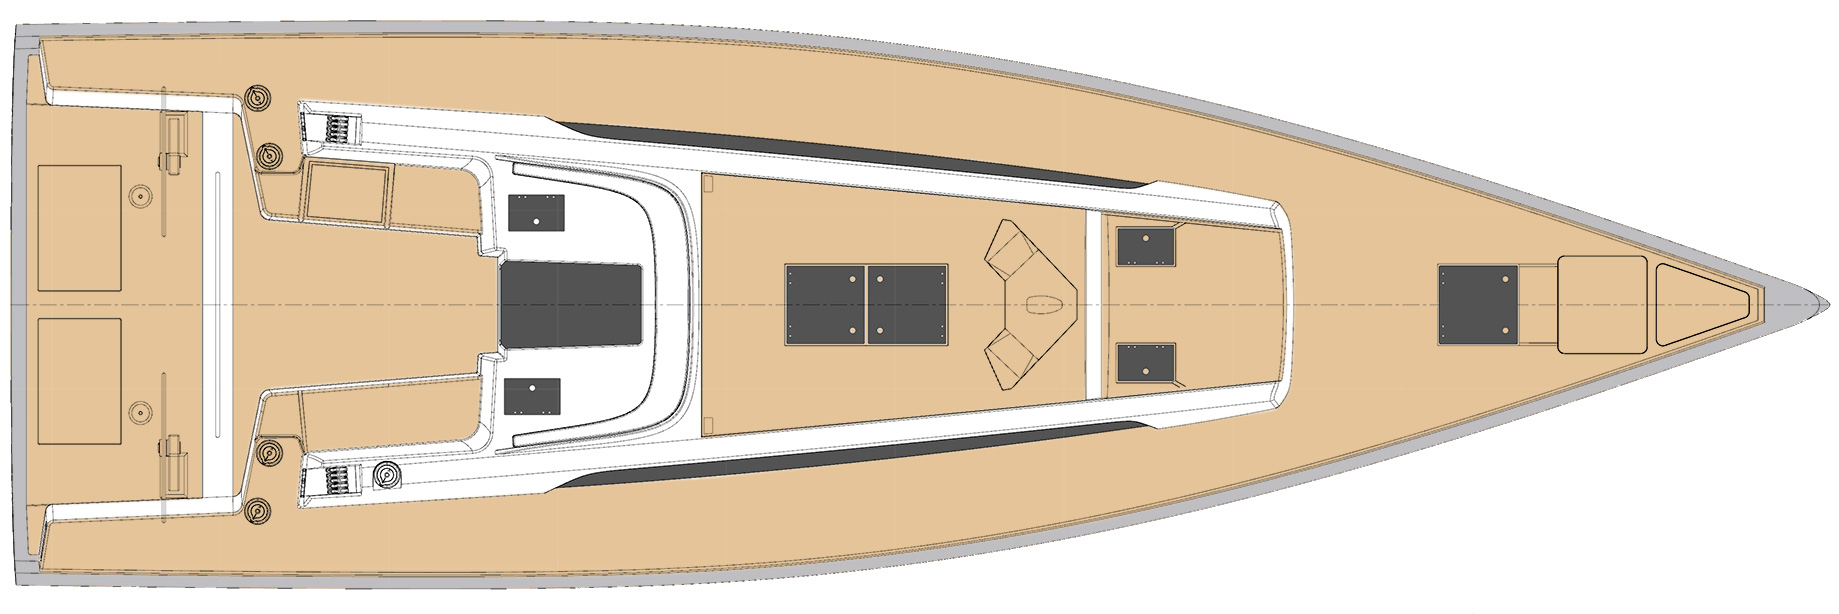 solaris 53 yacht